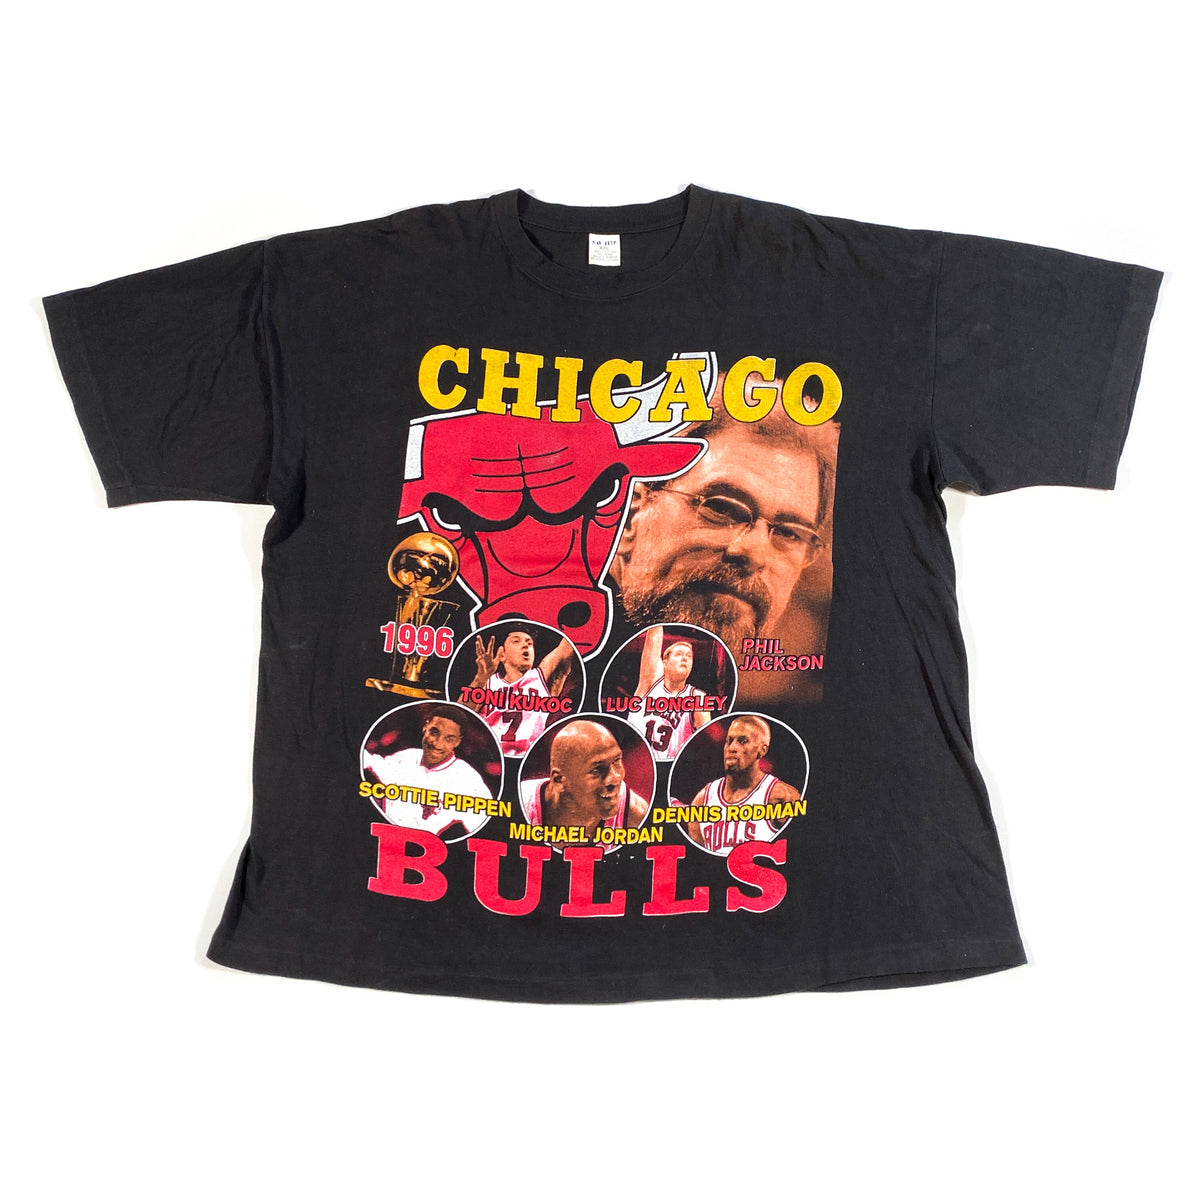 96 bulls shirt